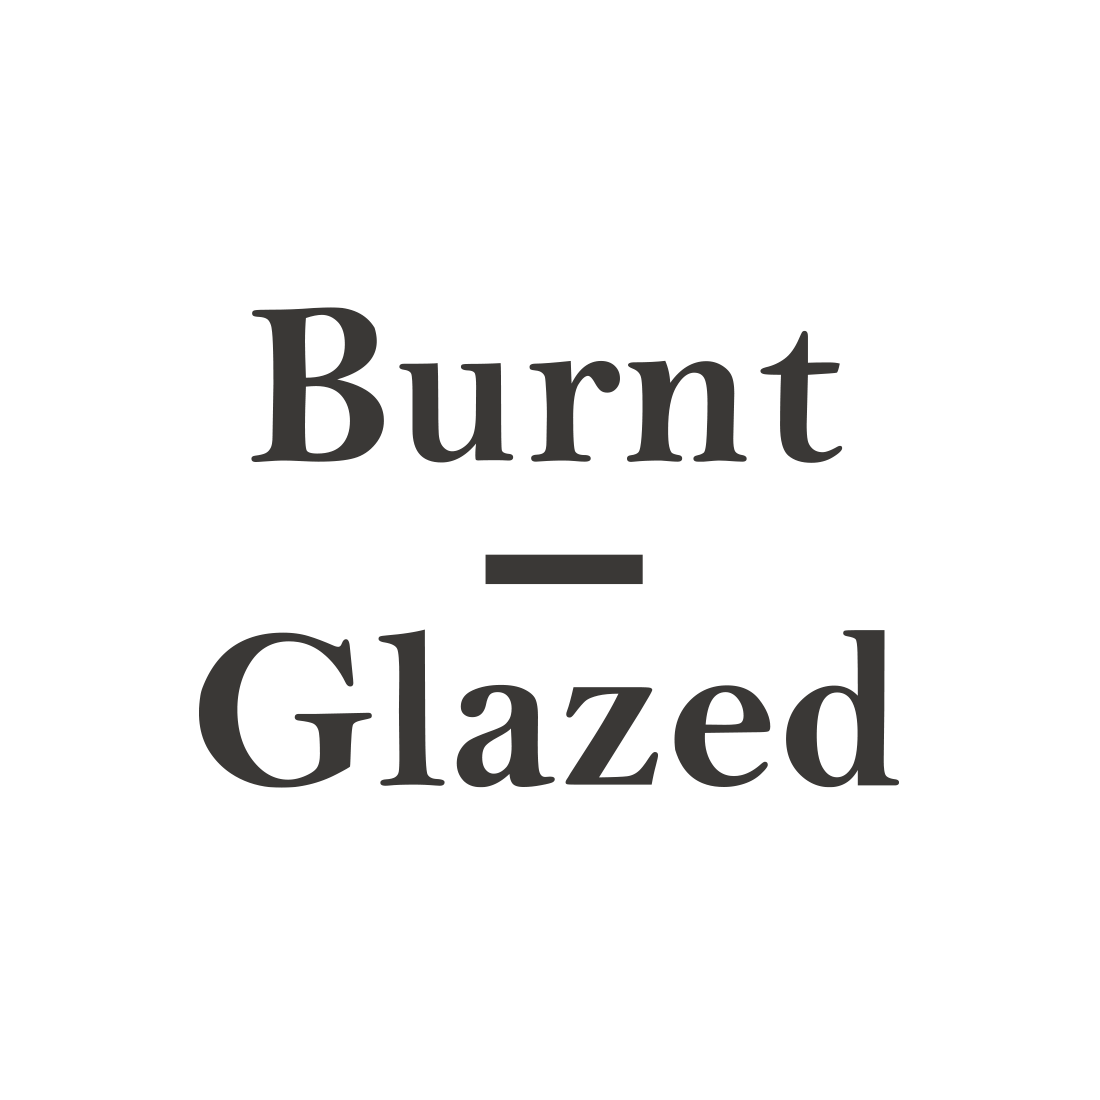 Burnt and Glazed